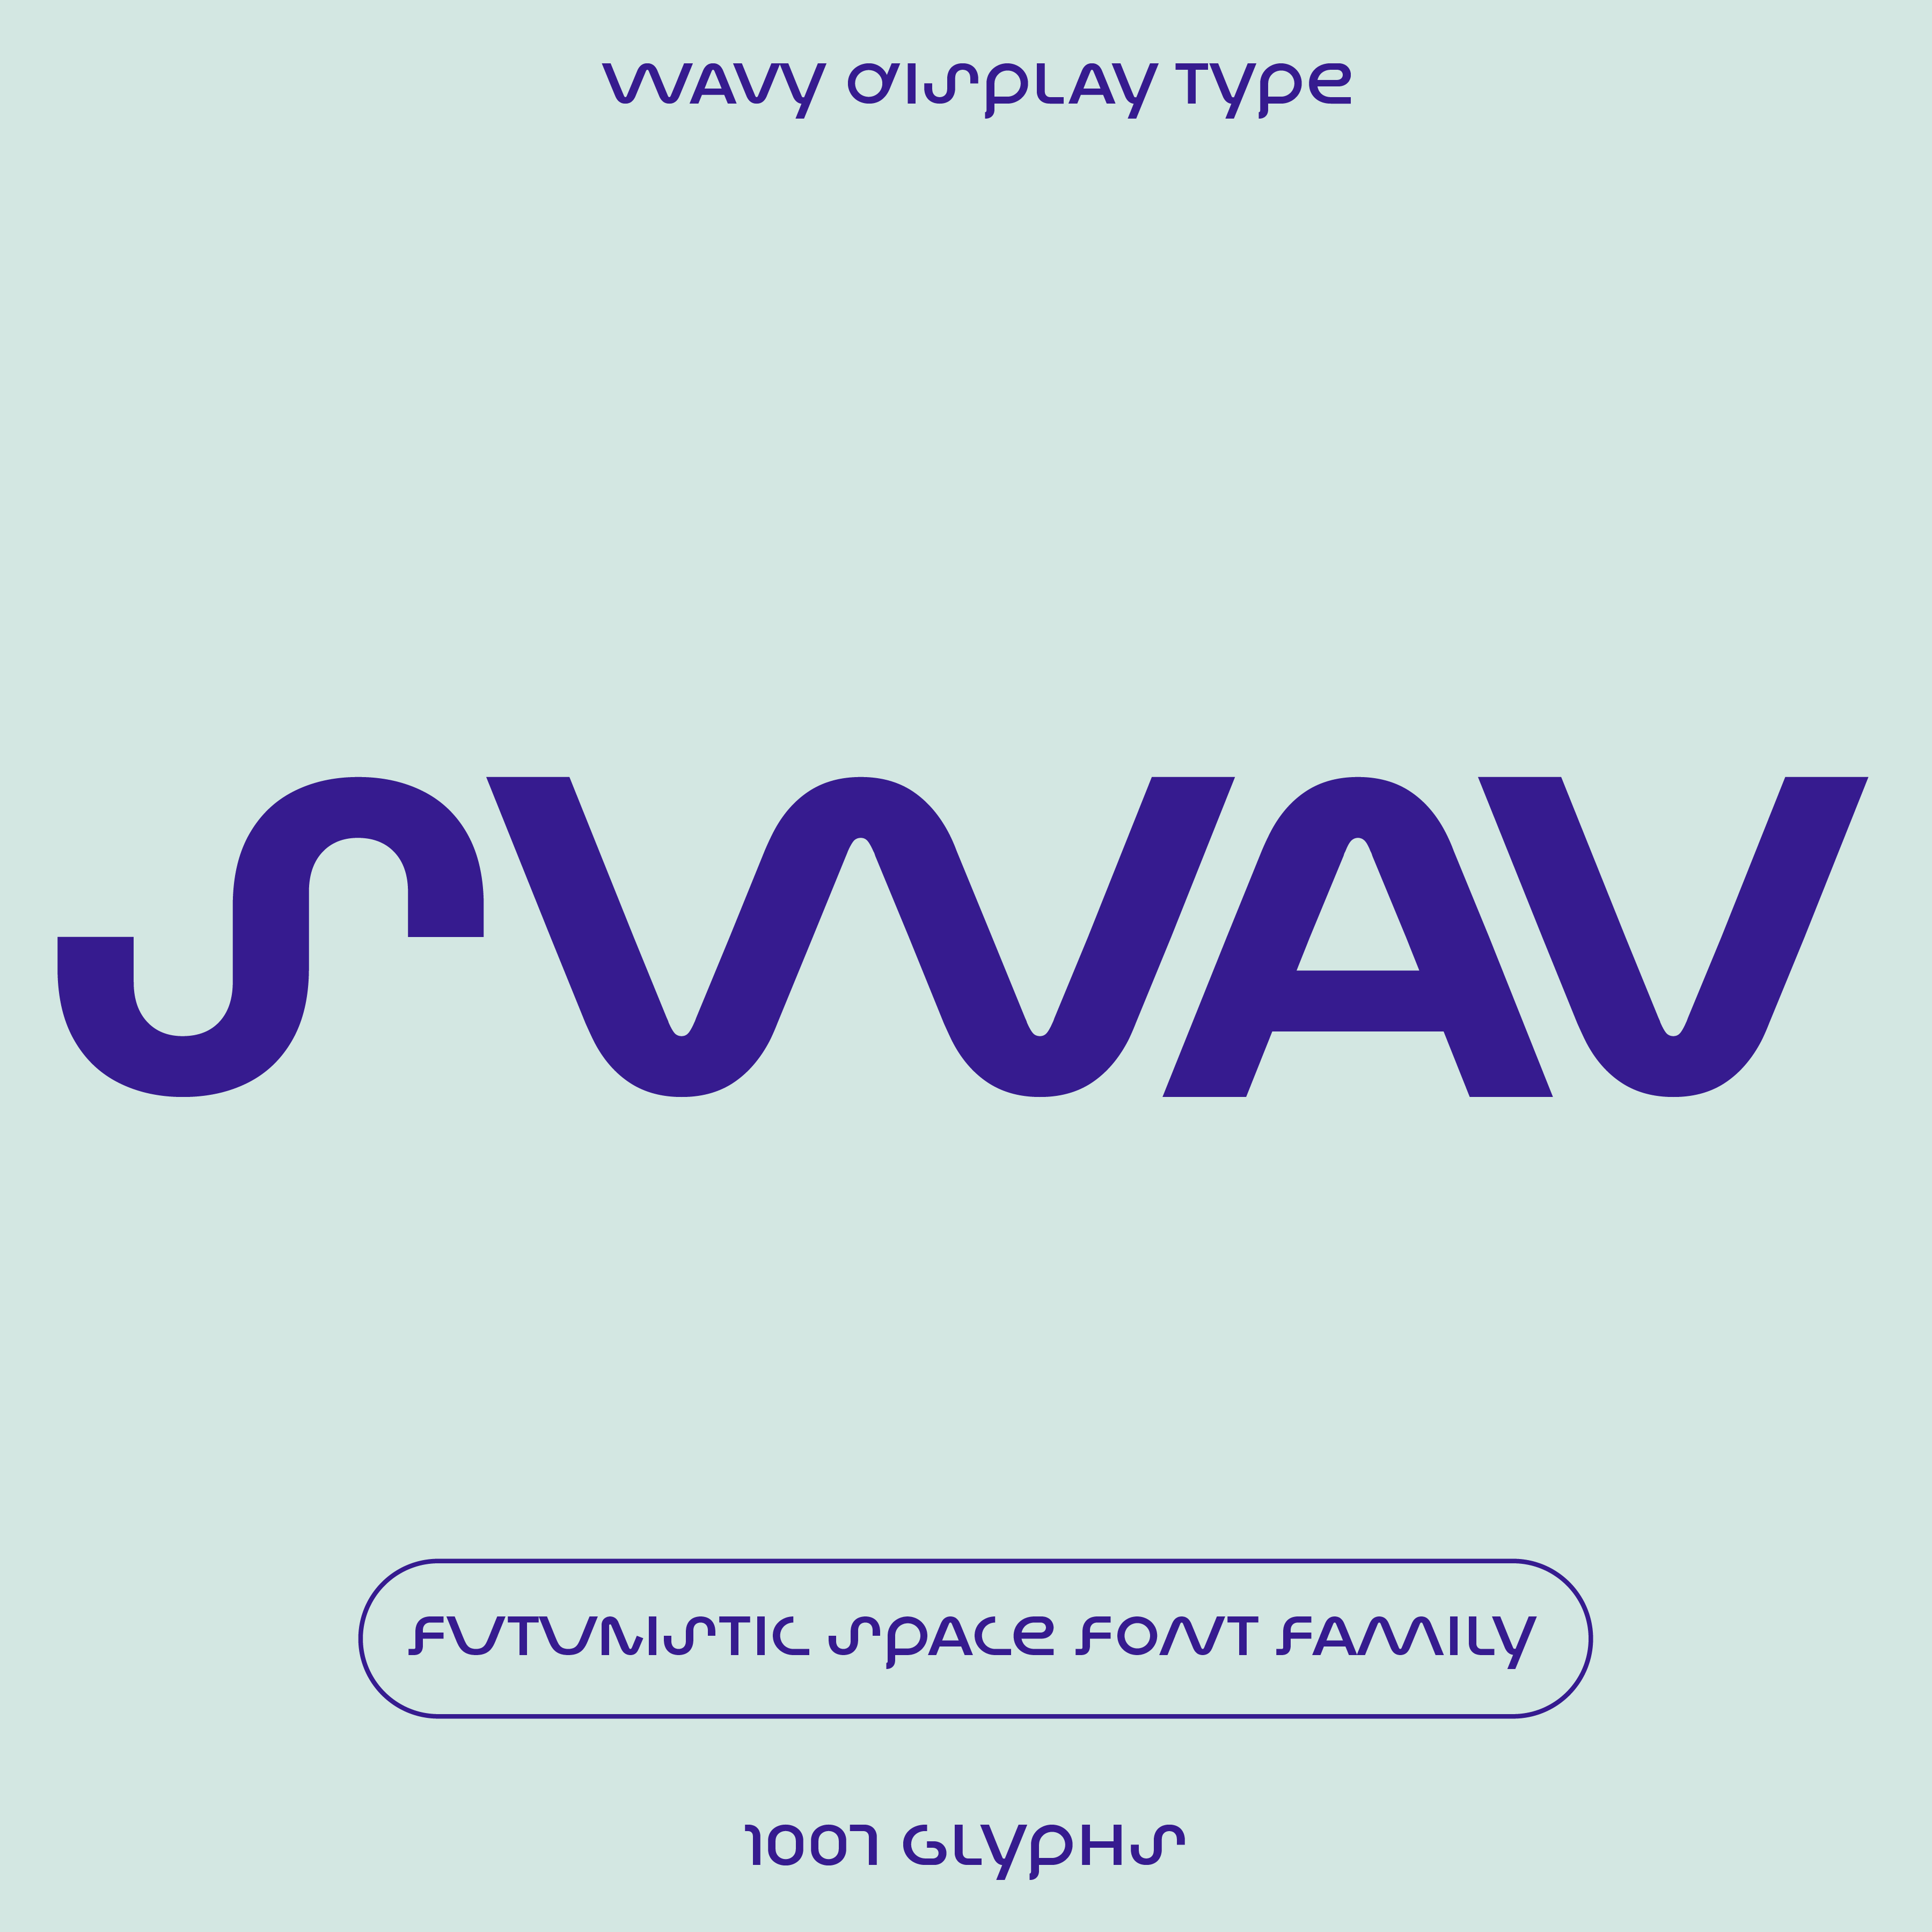 Swav—Wavy, futuristic font for logo design